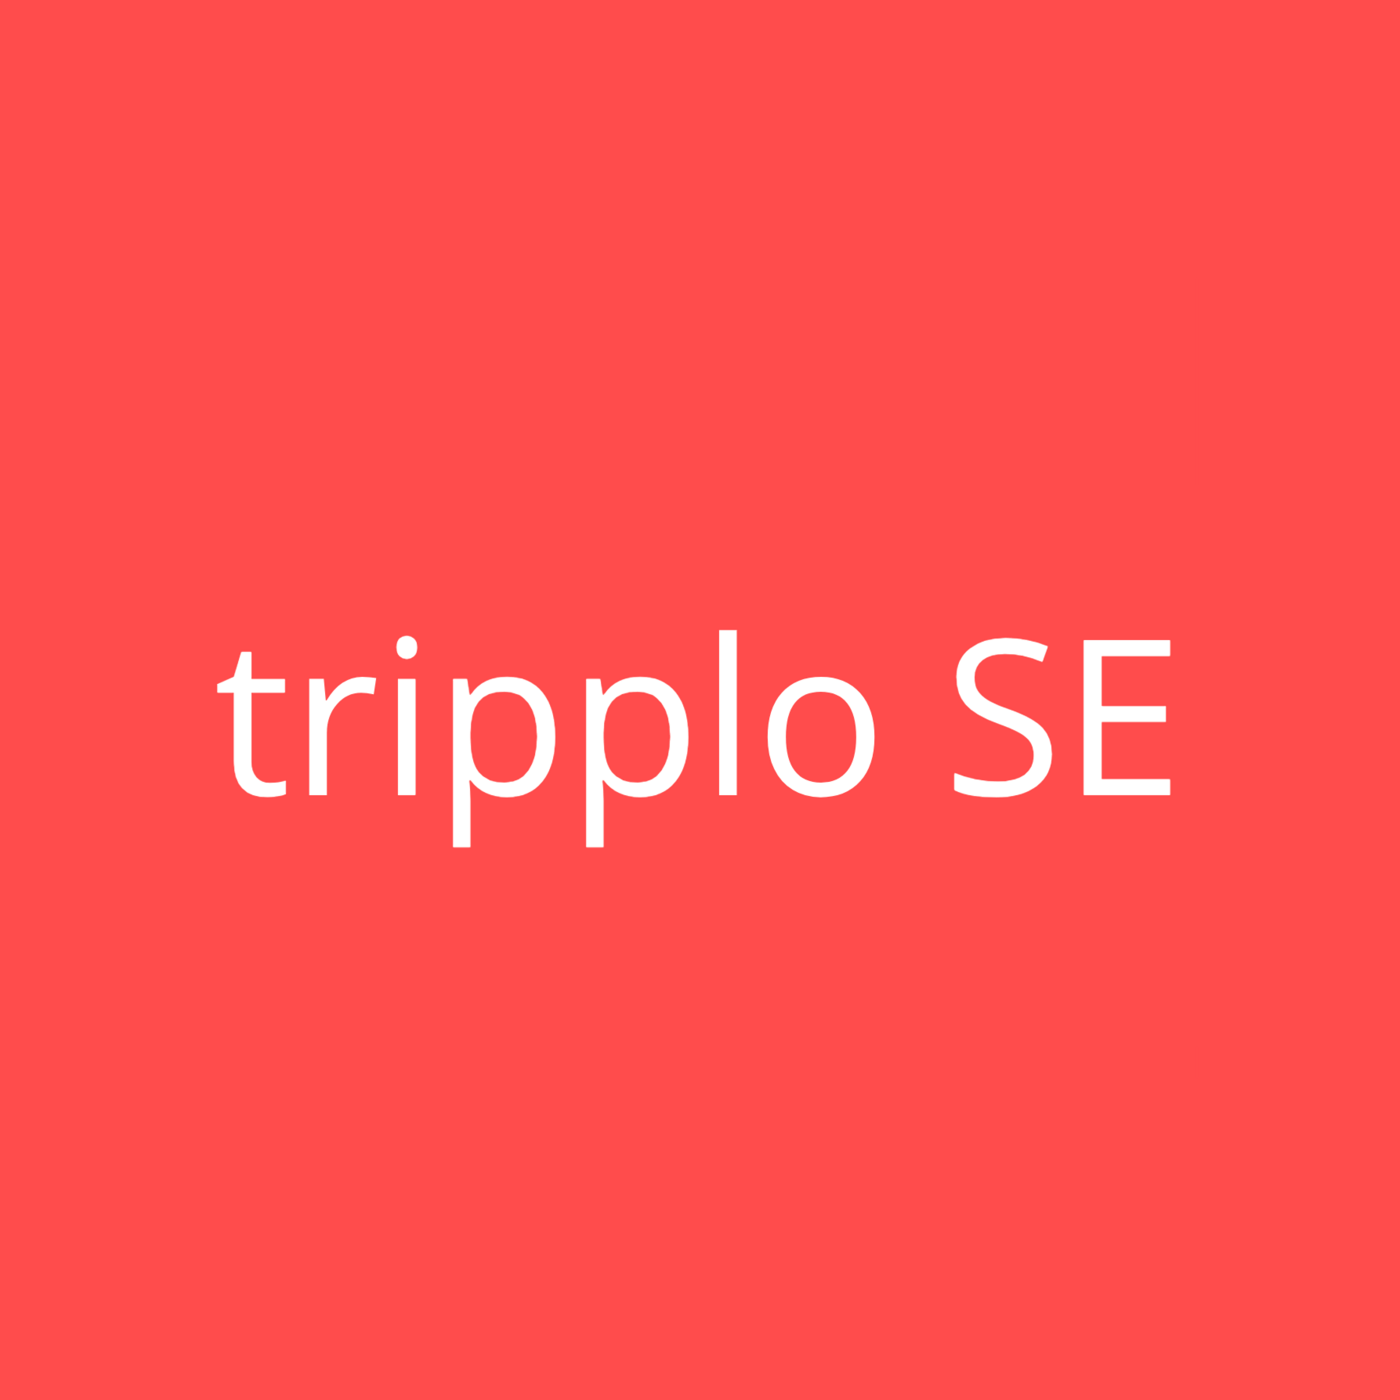 tripplo.com SE Podcast